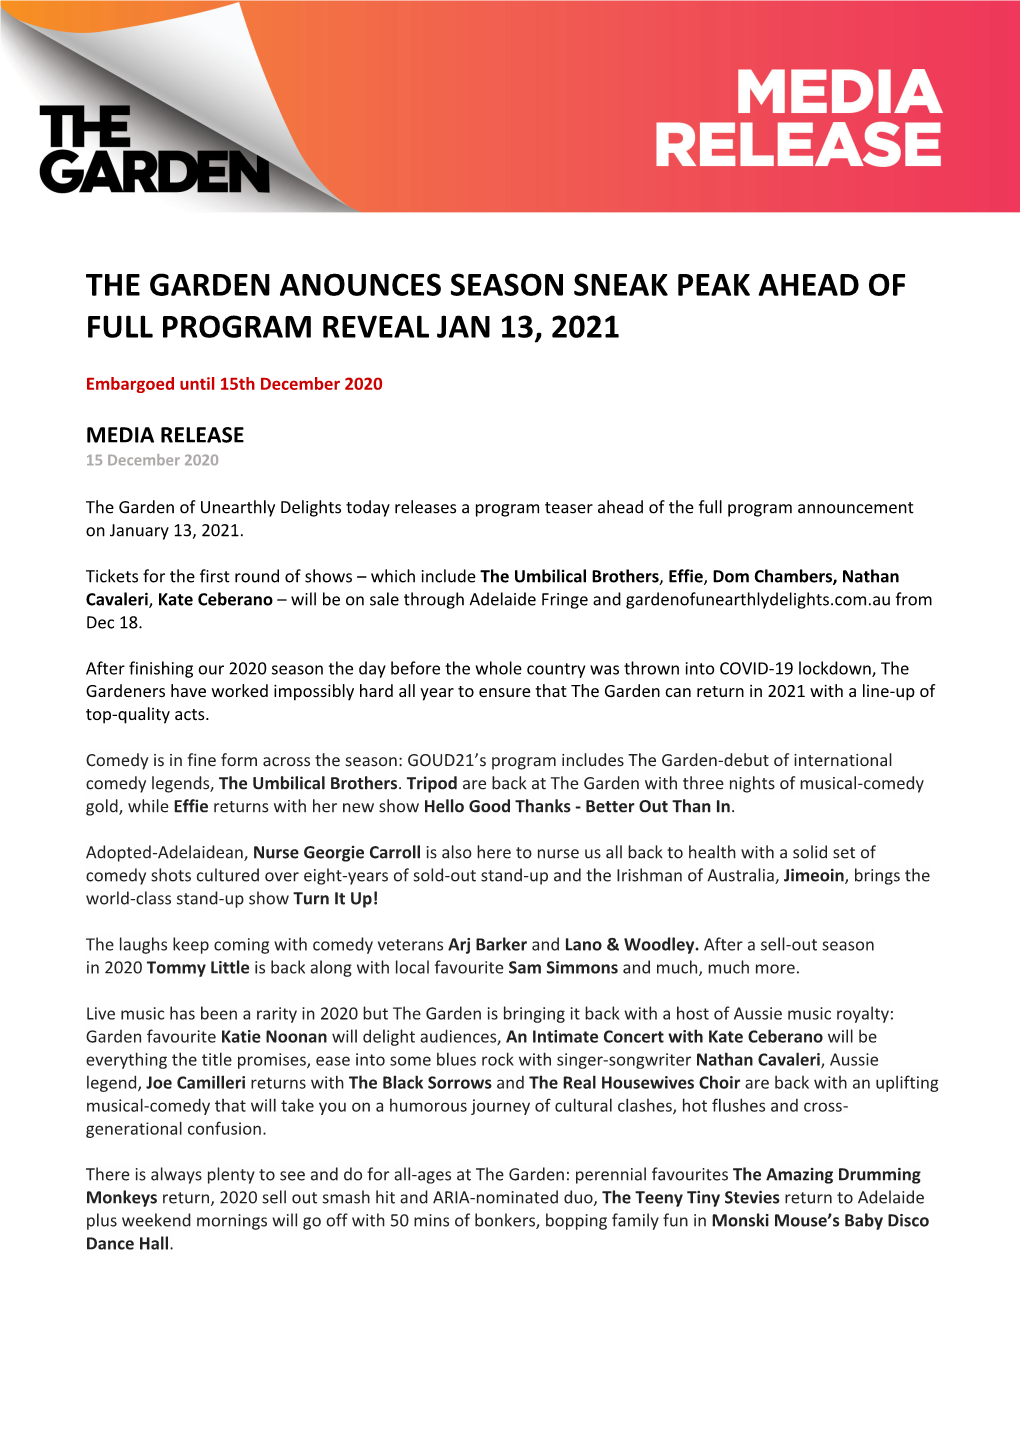 The Garden Anounces Season Sneak Peak Ahead of Full Program Reveal Jan 13, 2021